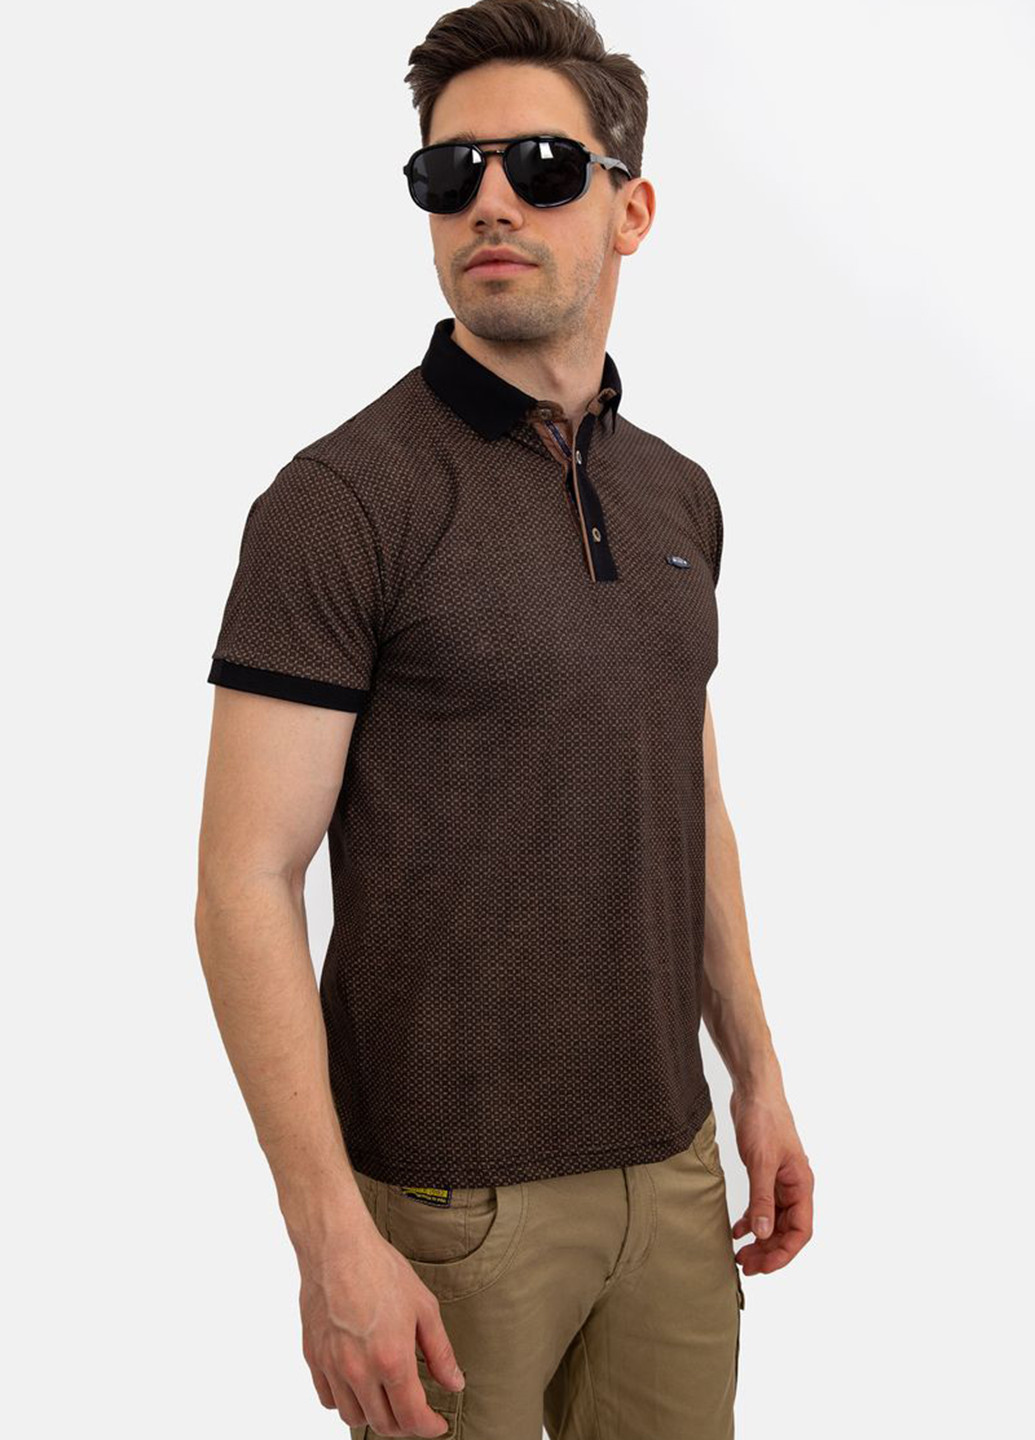 Коричневая футболка-поло для мужчин Ager с рисунком